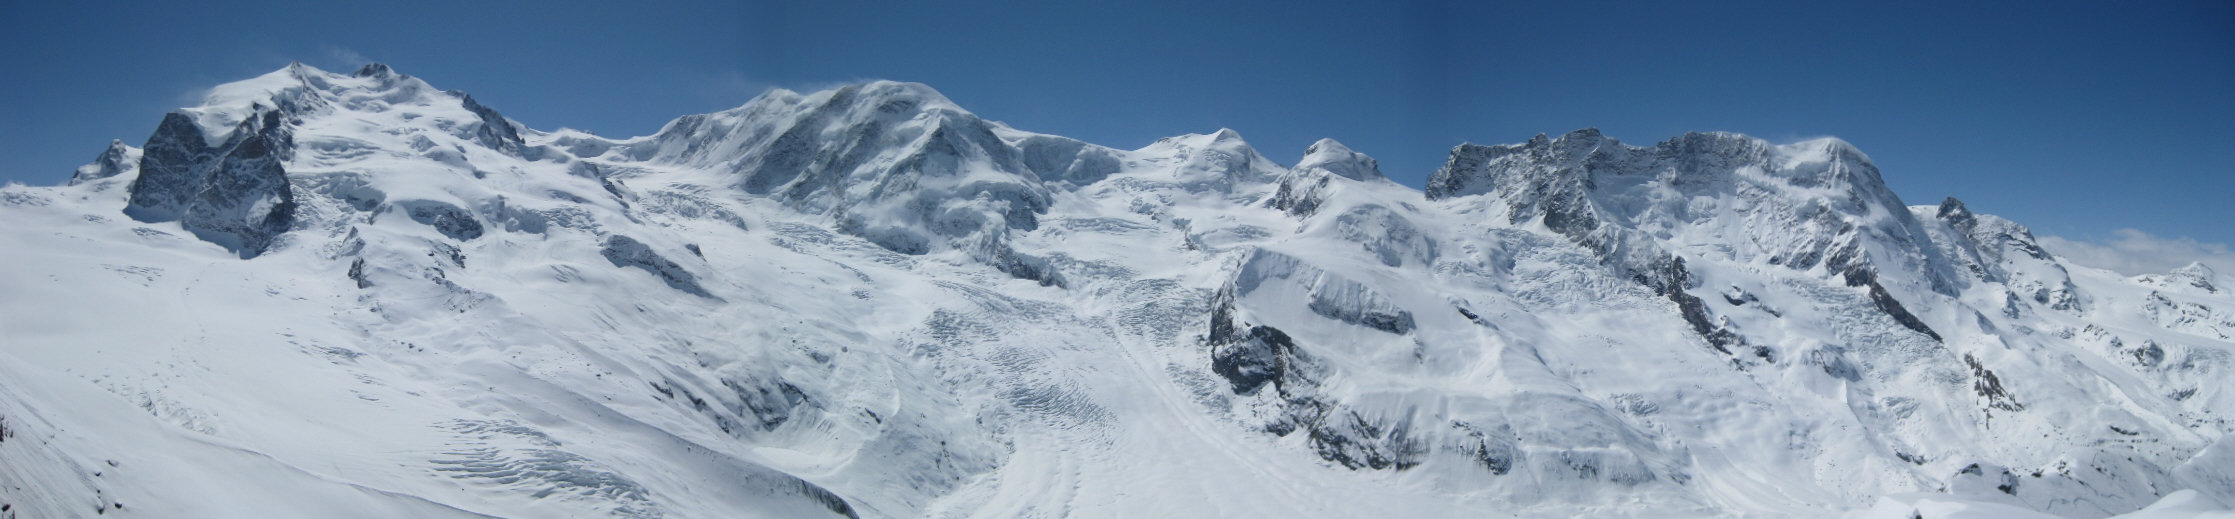 Monte-Rosa-Lyskamm-Castor-Pollux-Breithorn-Kl-Matterhorn